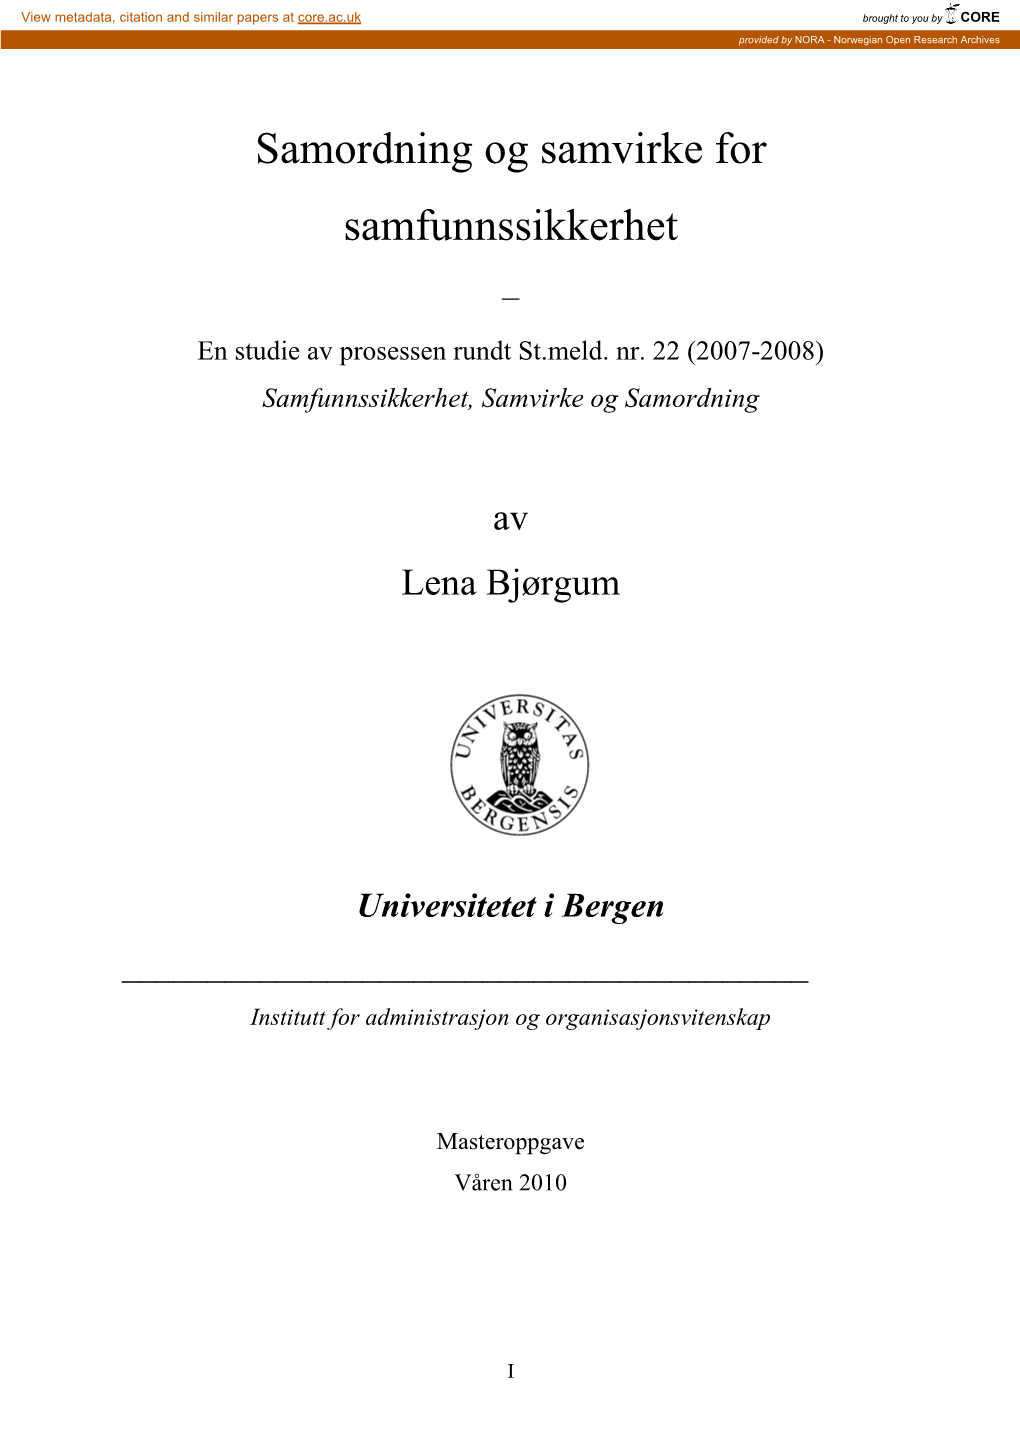 Masteroppgave Lena Bjørgum